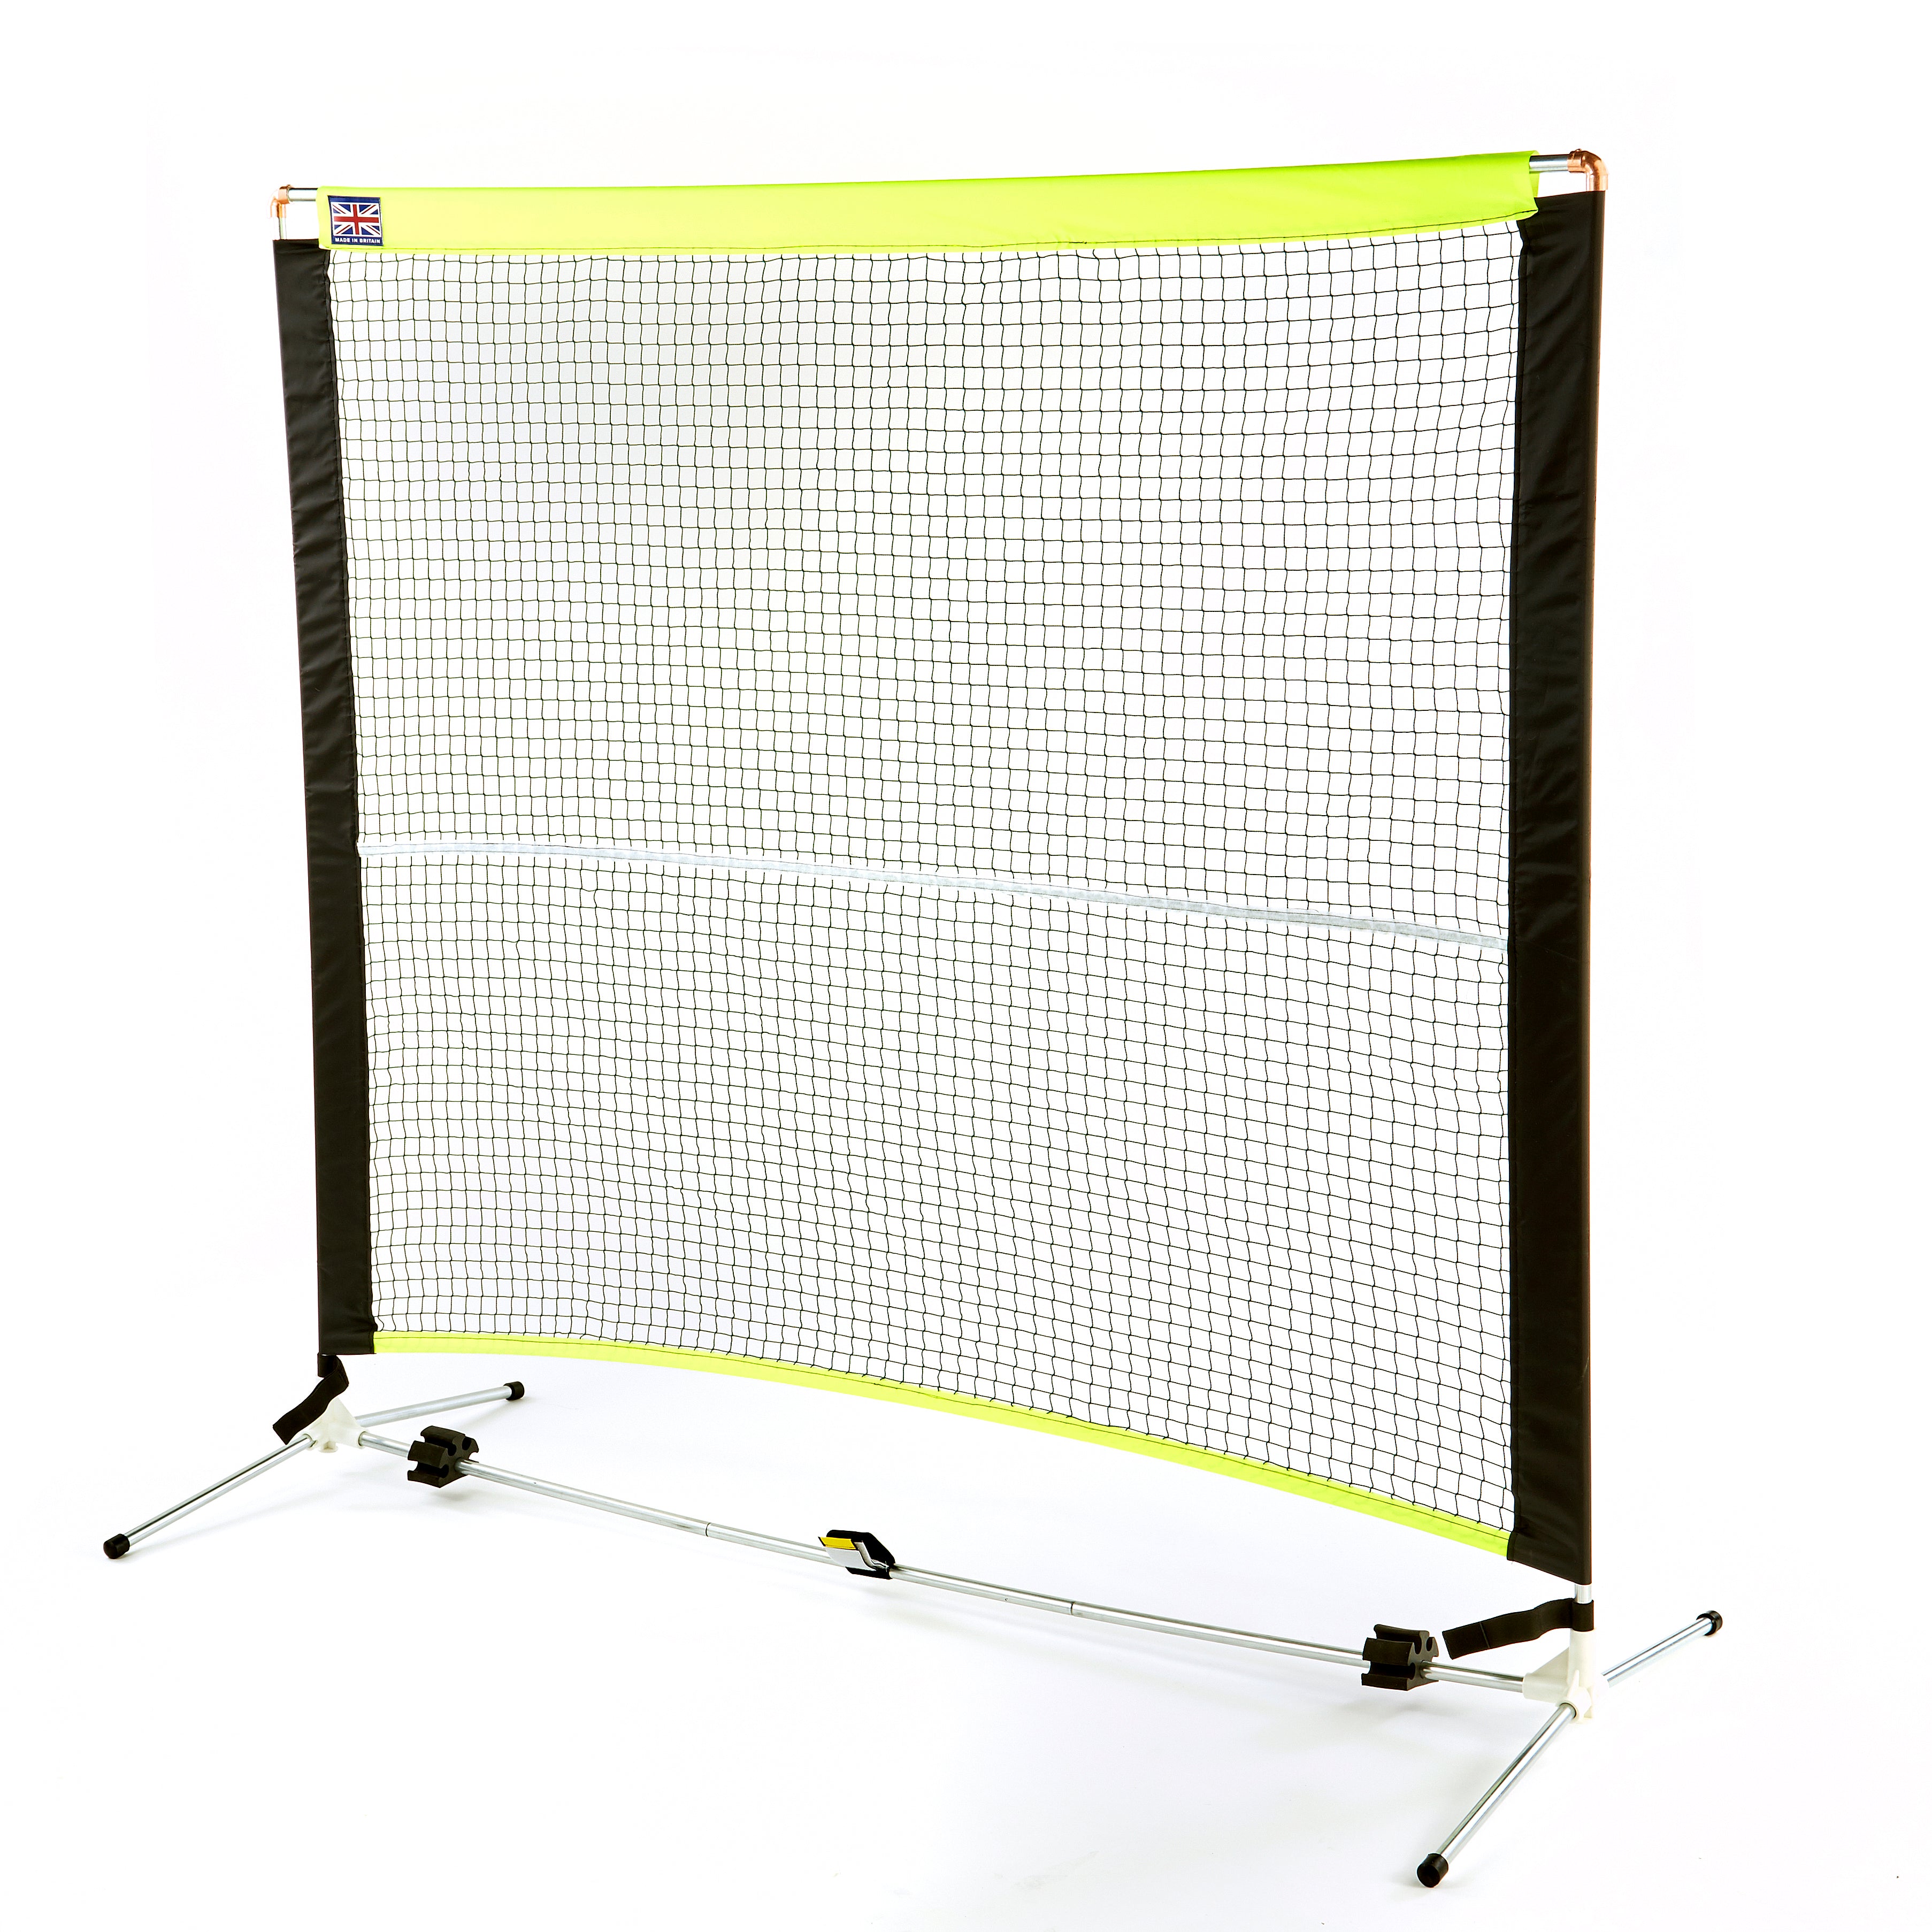 ZSIG Portable Large Reboubnd Tennis Trainer 